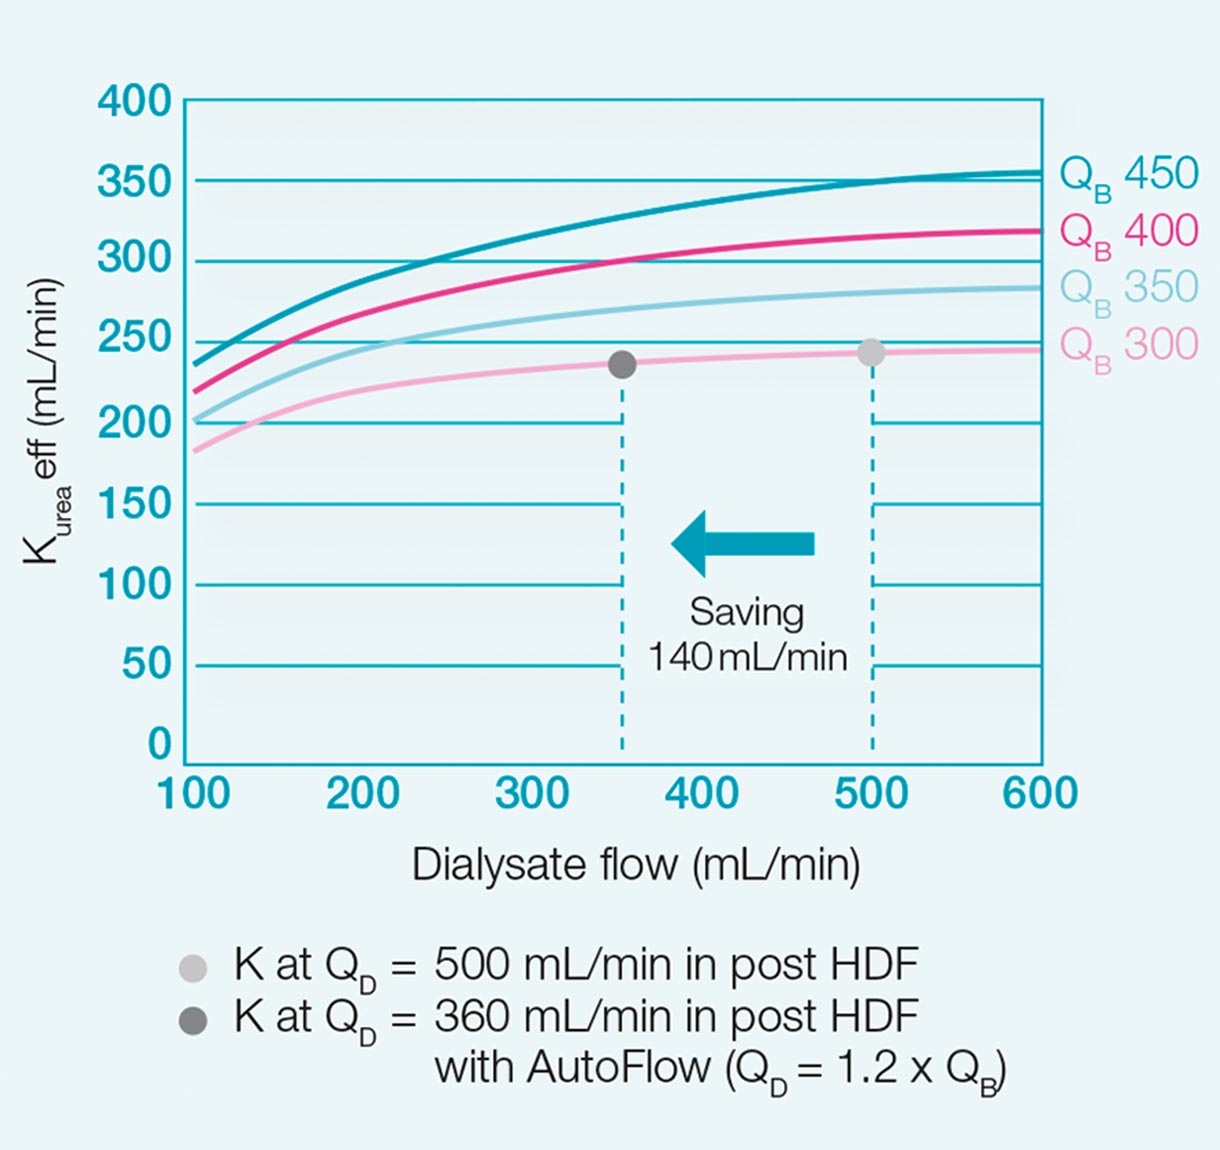 Diagram of dialysate flow